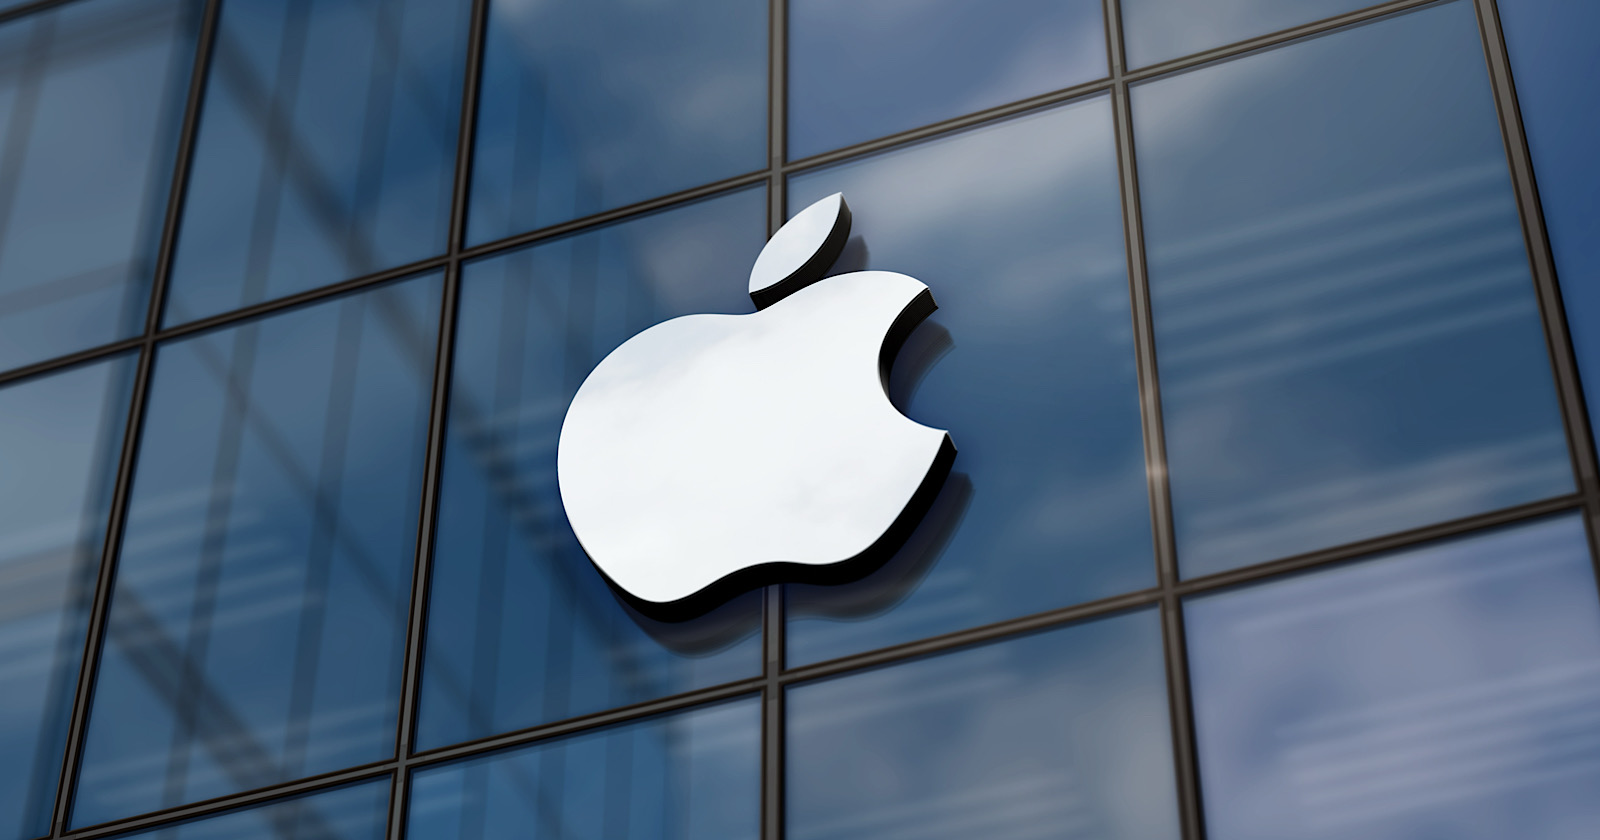 Apple's Talks With Bing & DuckDuckGo Revealed in Google Antitrust Case